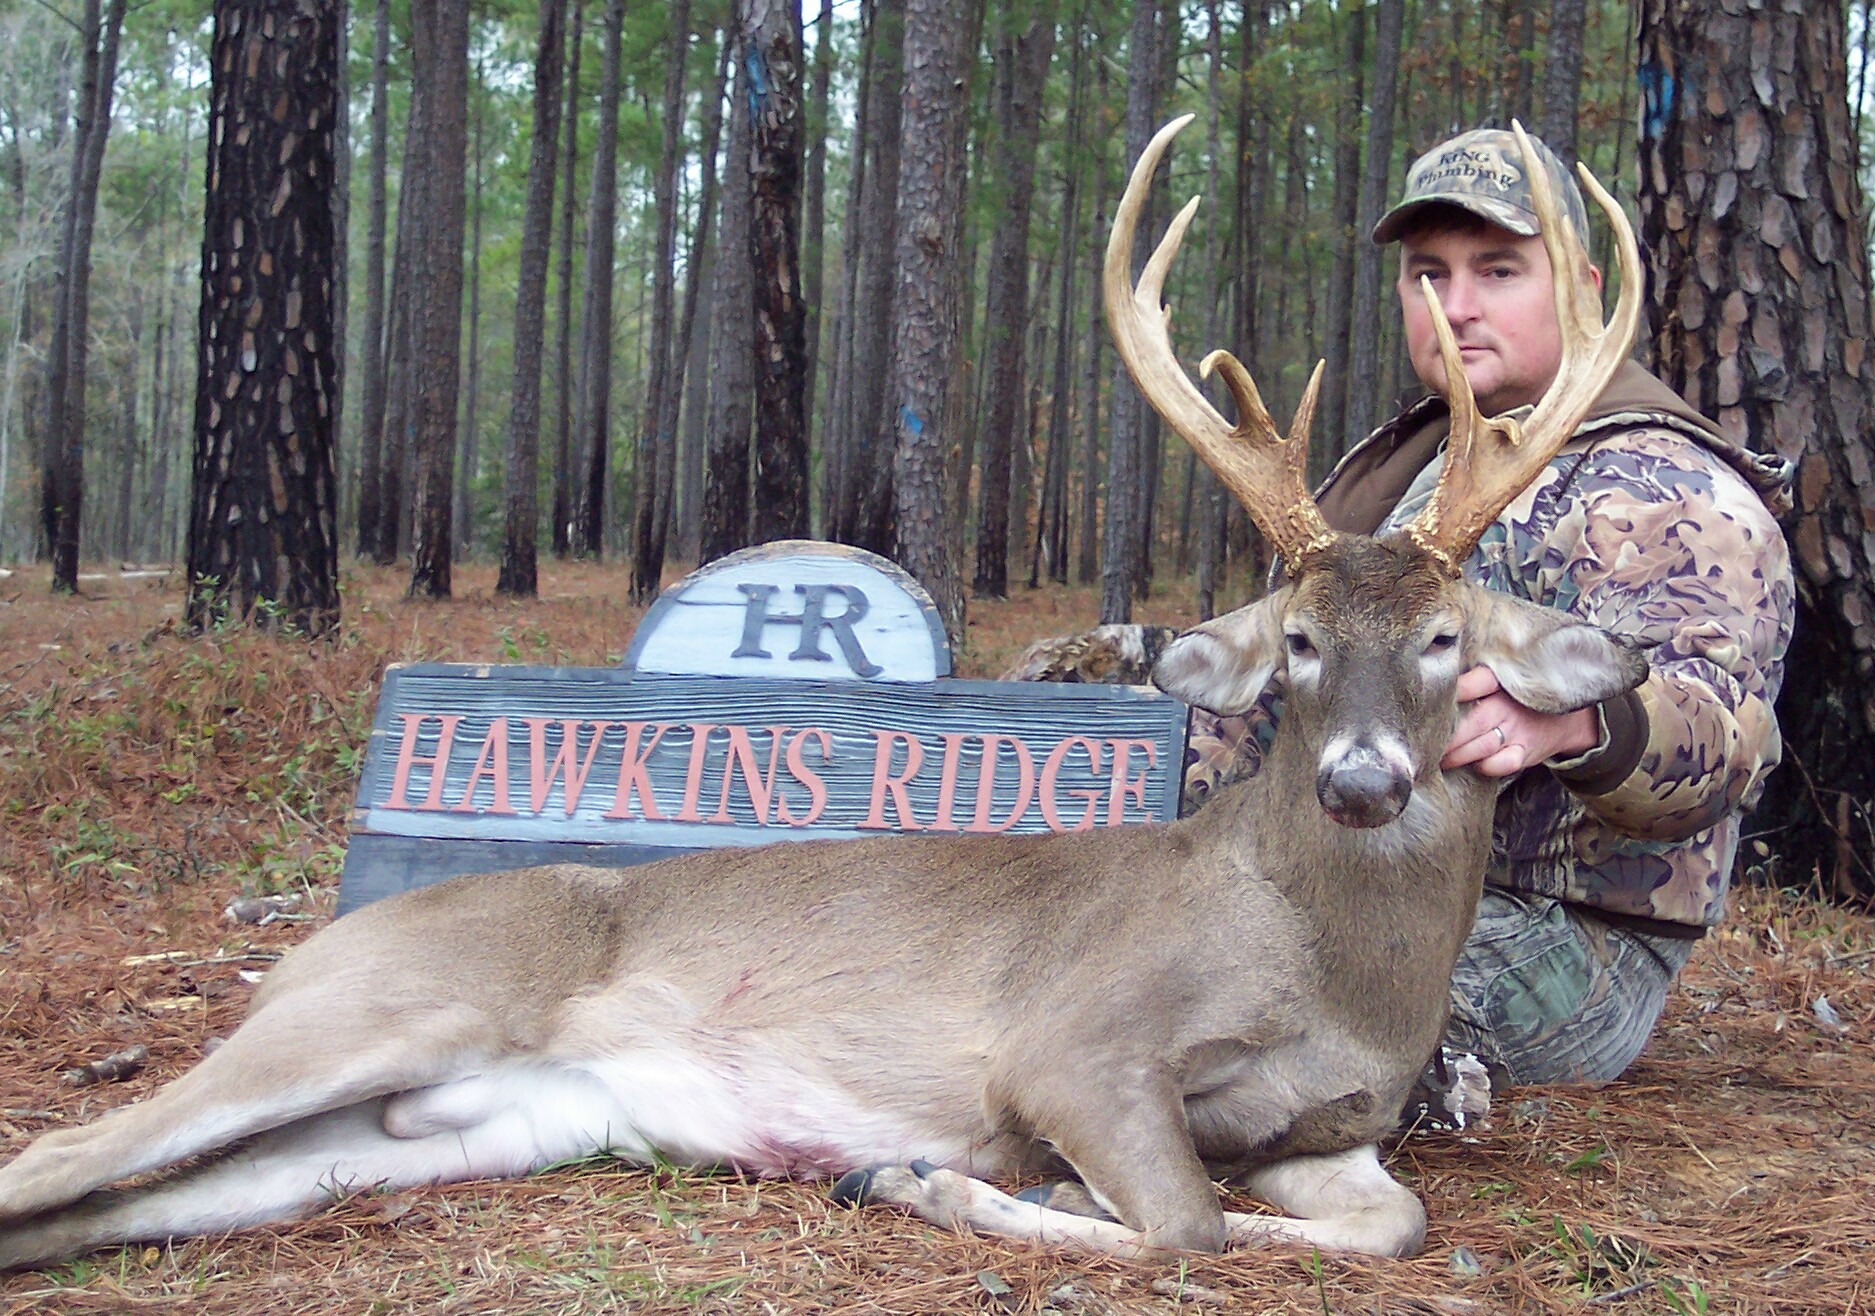 Alabama deer hunting